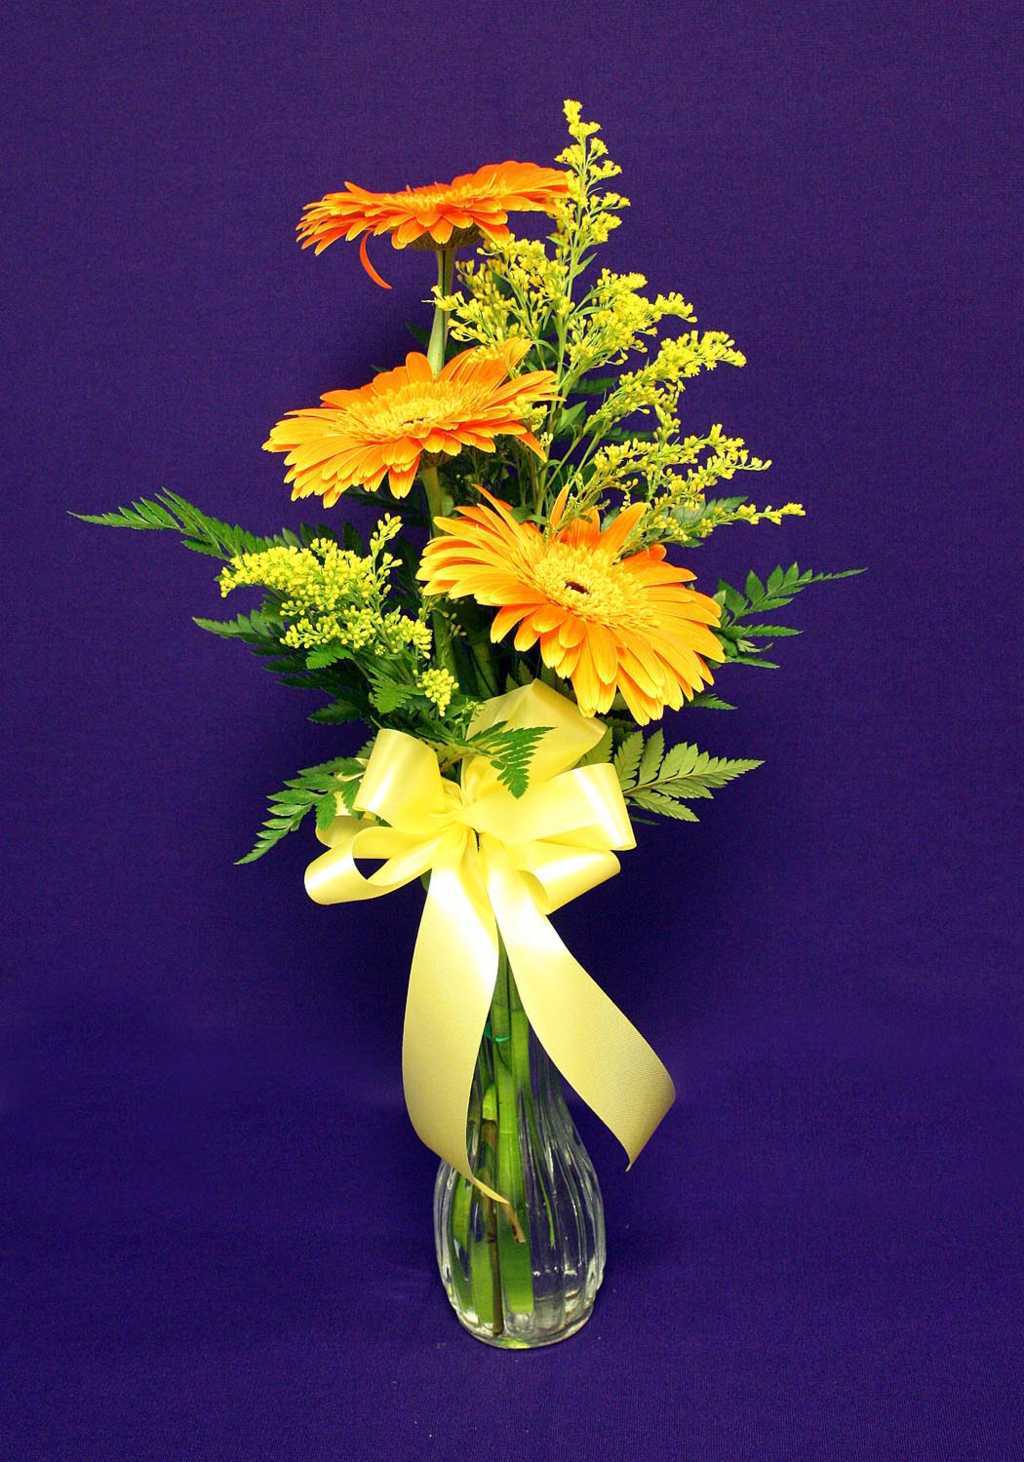  Orange Flower with Yellow Ribbon Flower Arrangement from Mon General Hospital Gift Shop